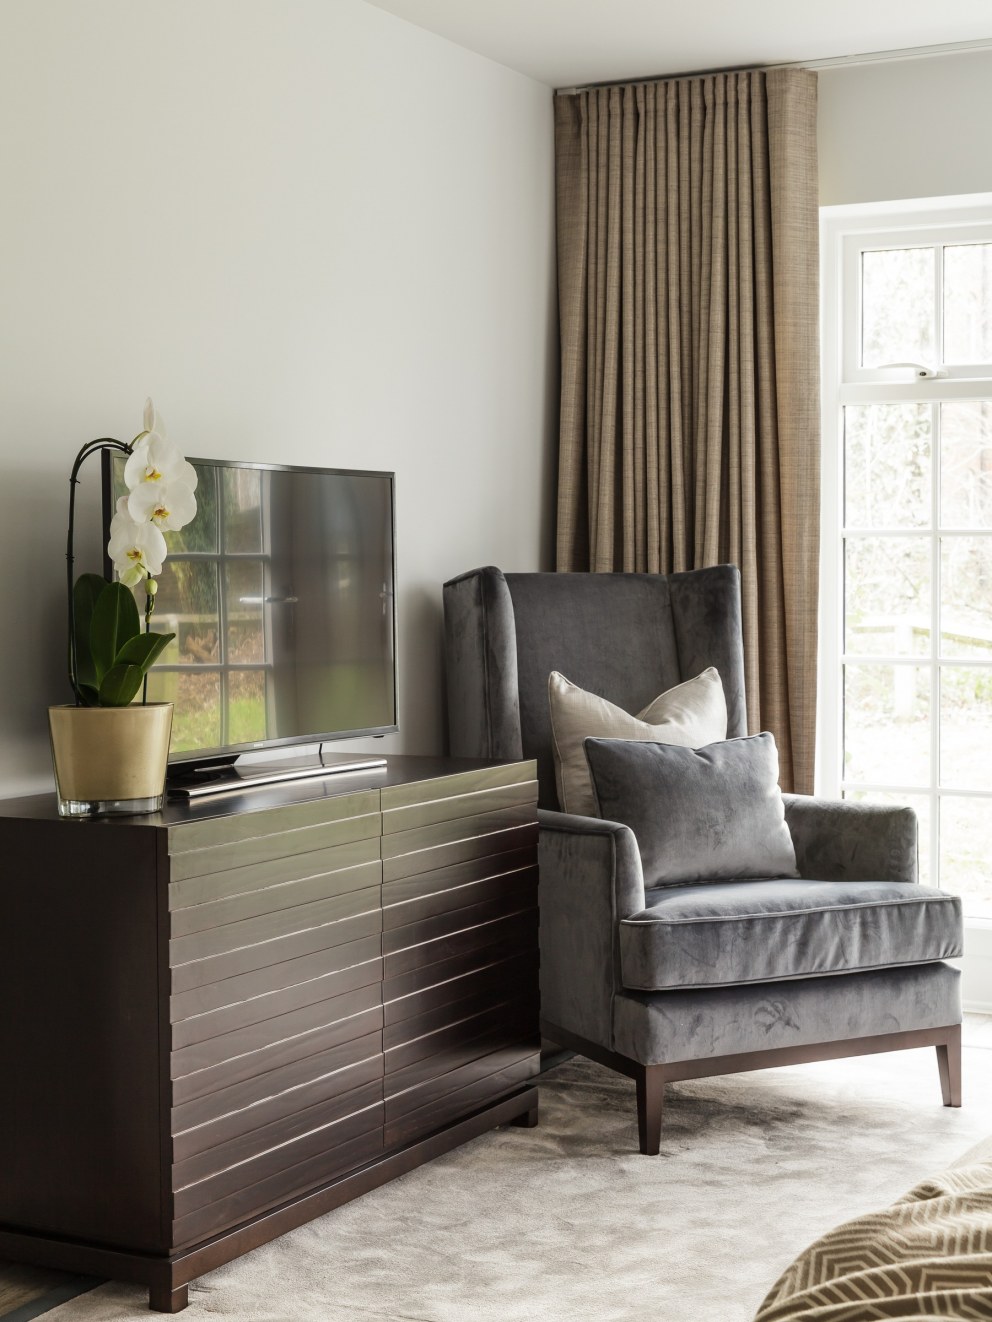 Fresh, contemporary apartment in St Albans | Lounge Area - Bespoke Furniture | Interior Designers